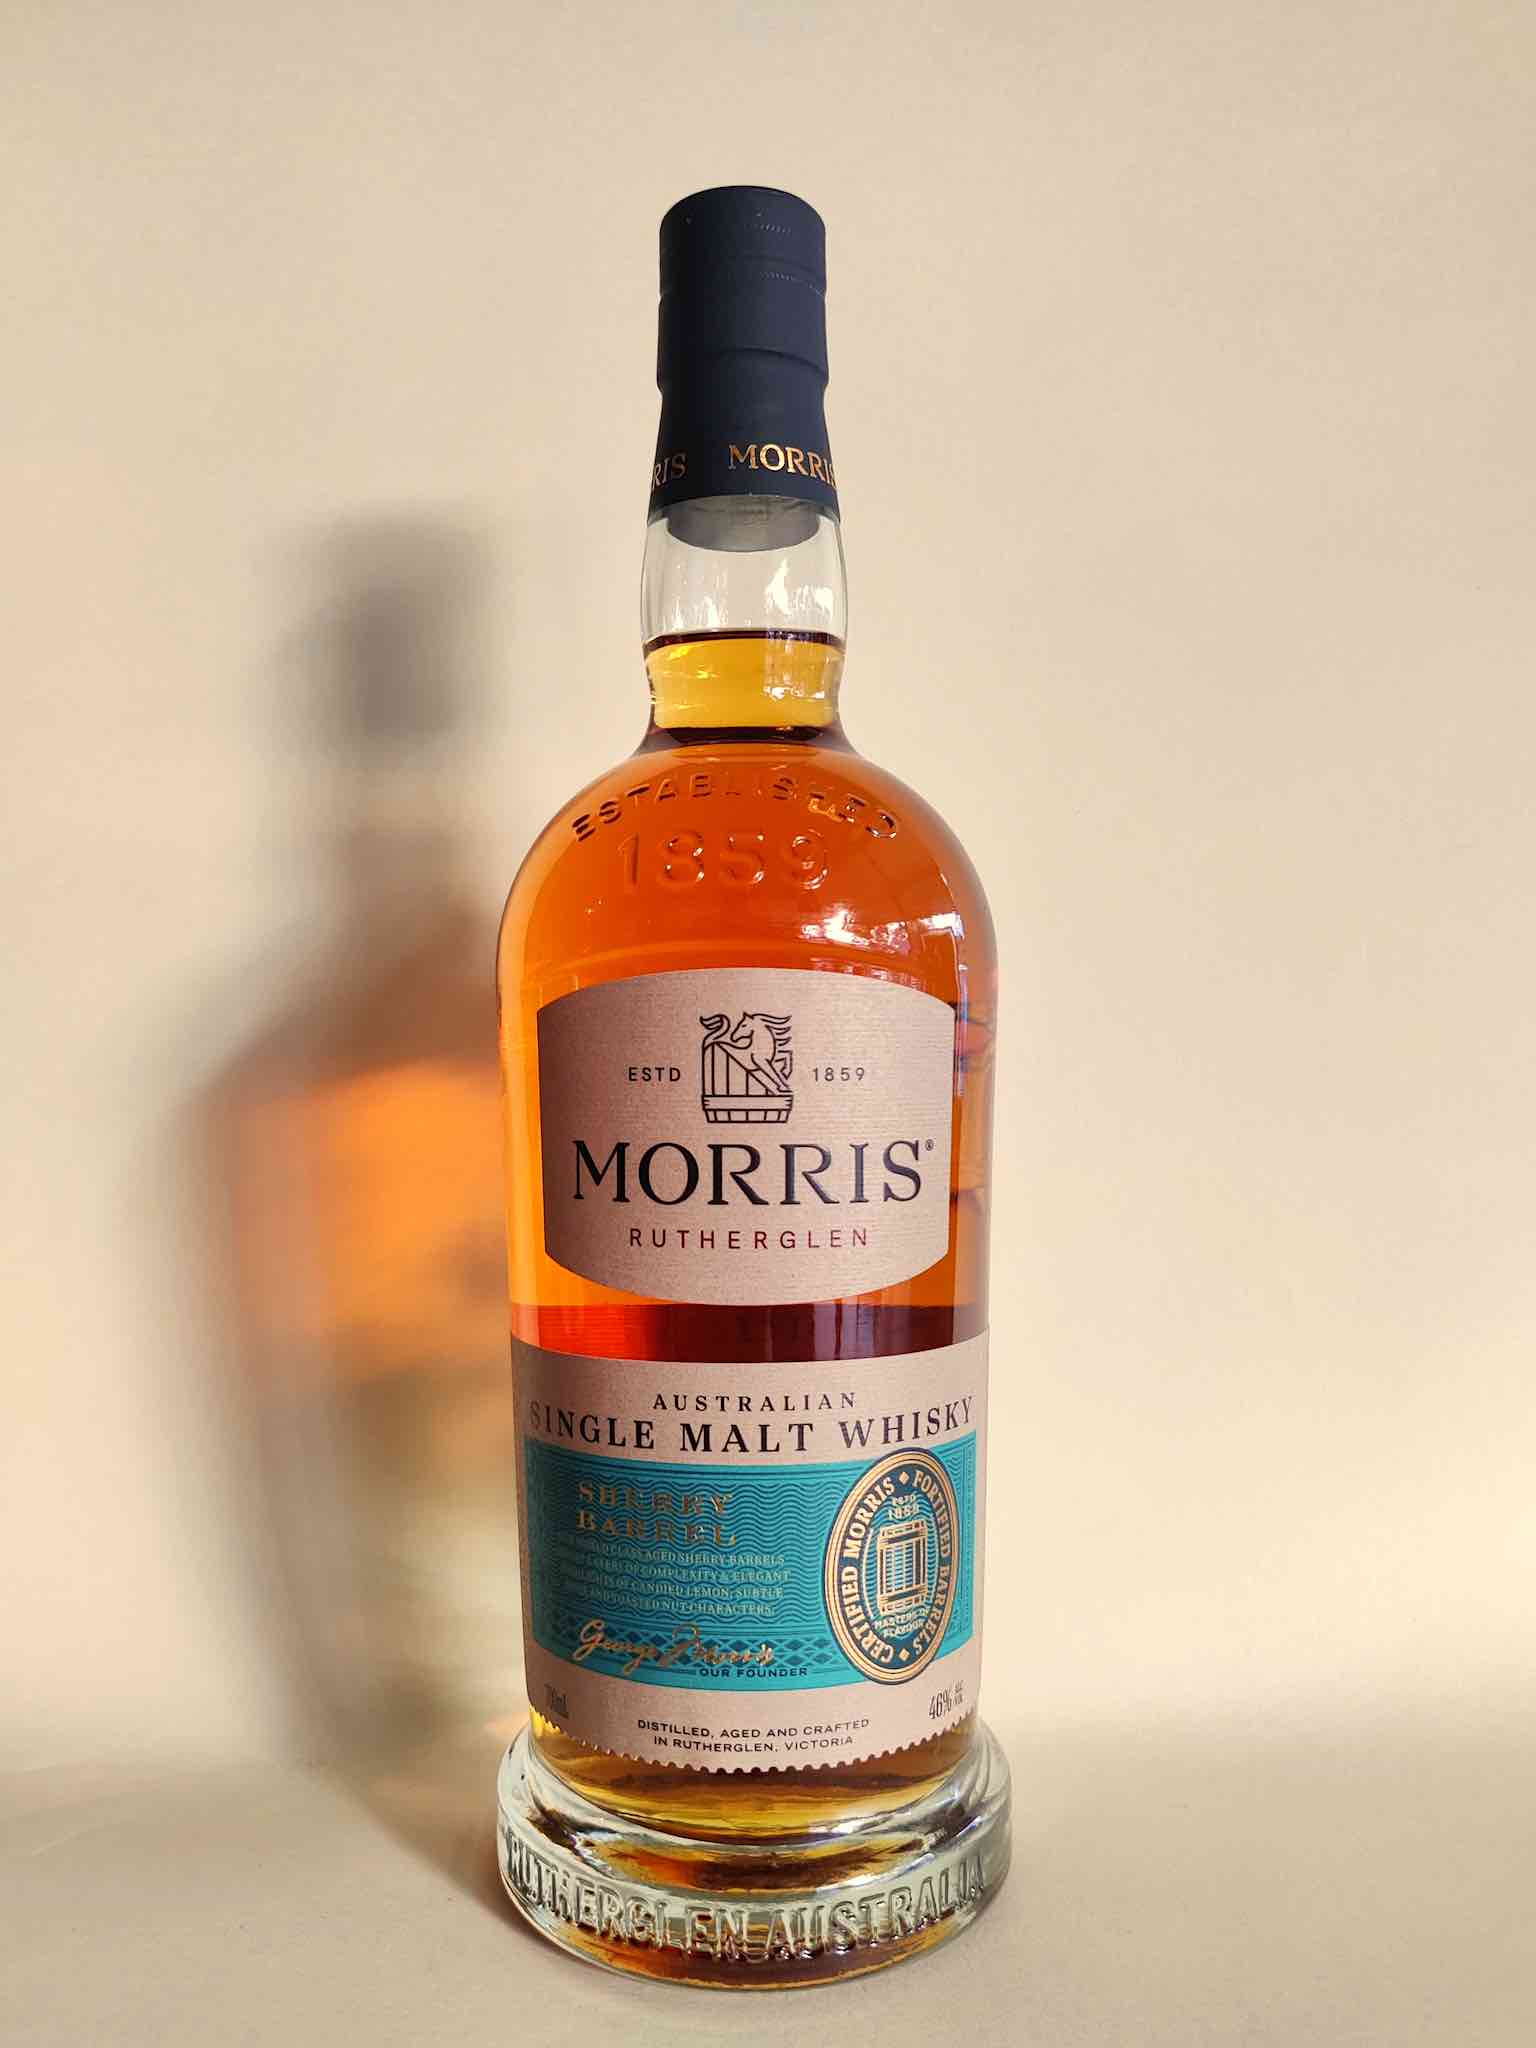 A 700ml bottle of Morris Sherry Barrel Single Malt Whisky from Rutherglen Victoria